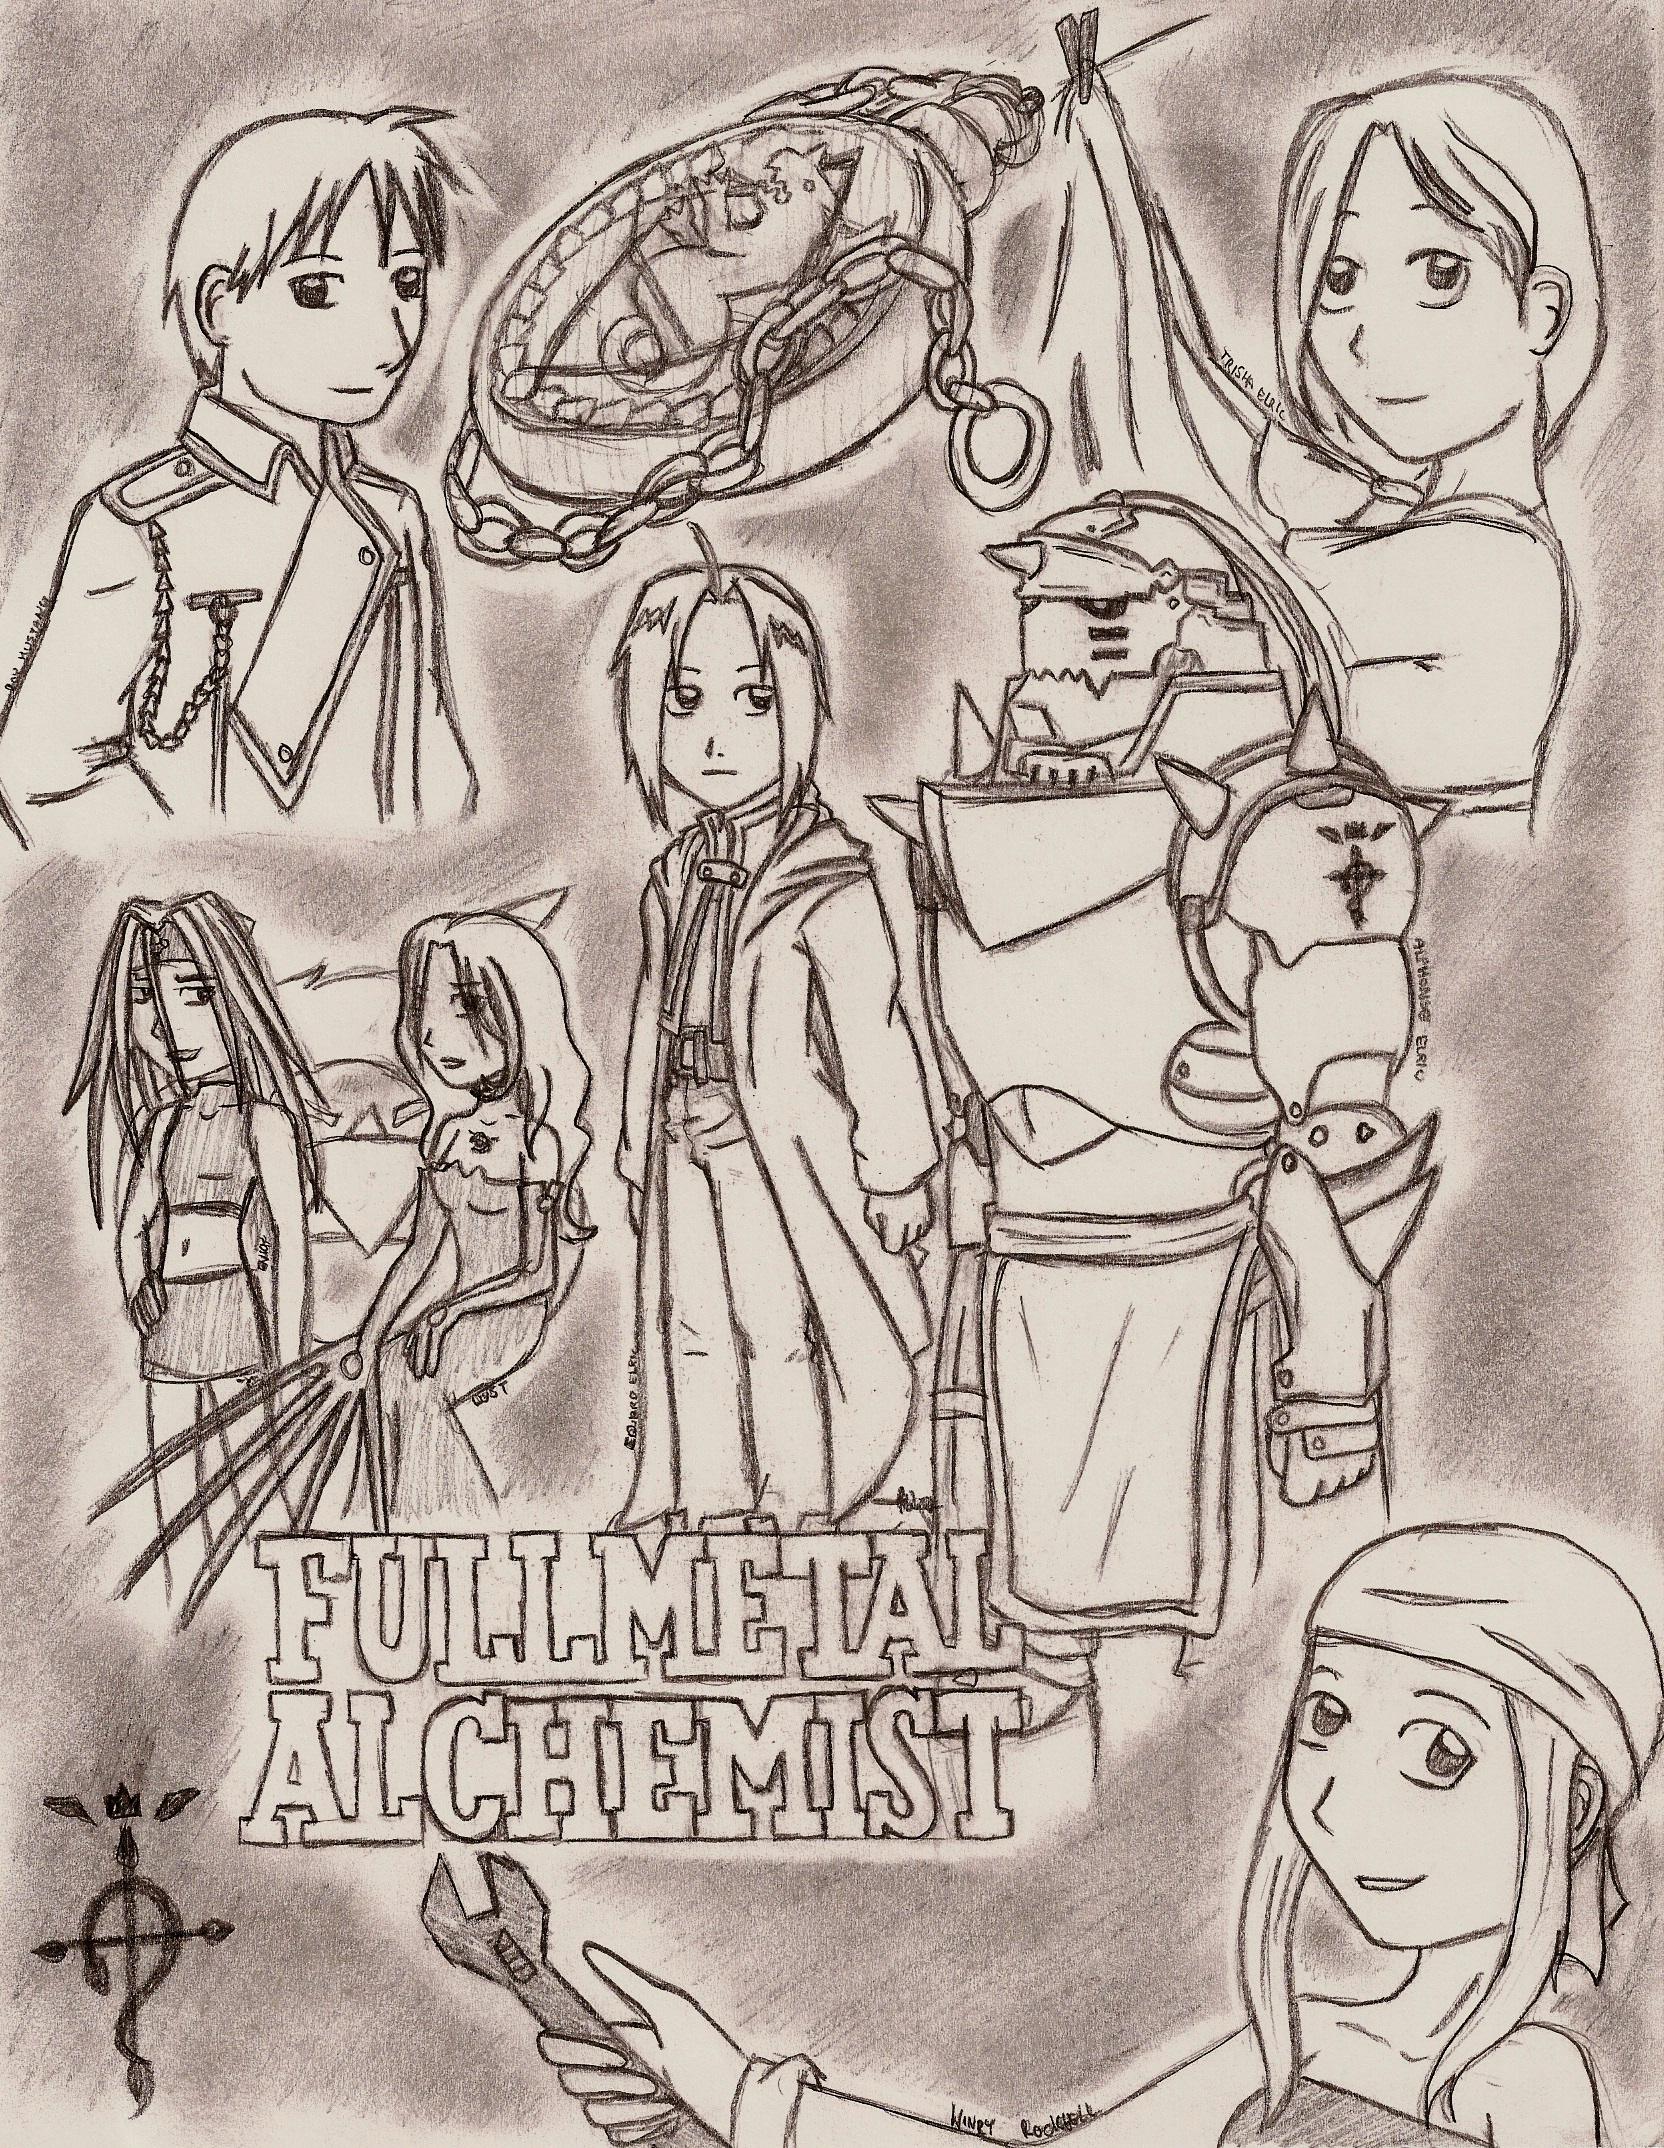 Fullmetal Alchemist (how original XD) by mystic_rat_theif